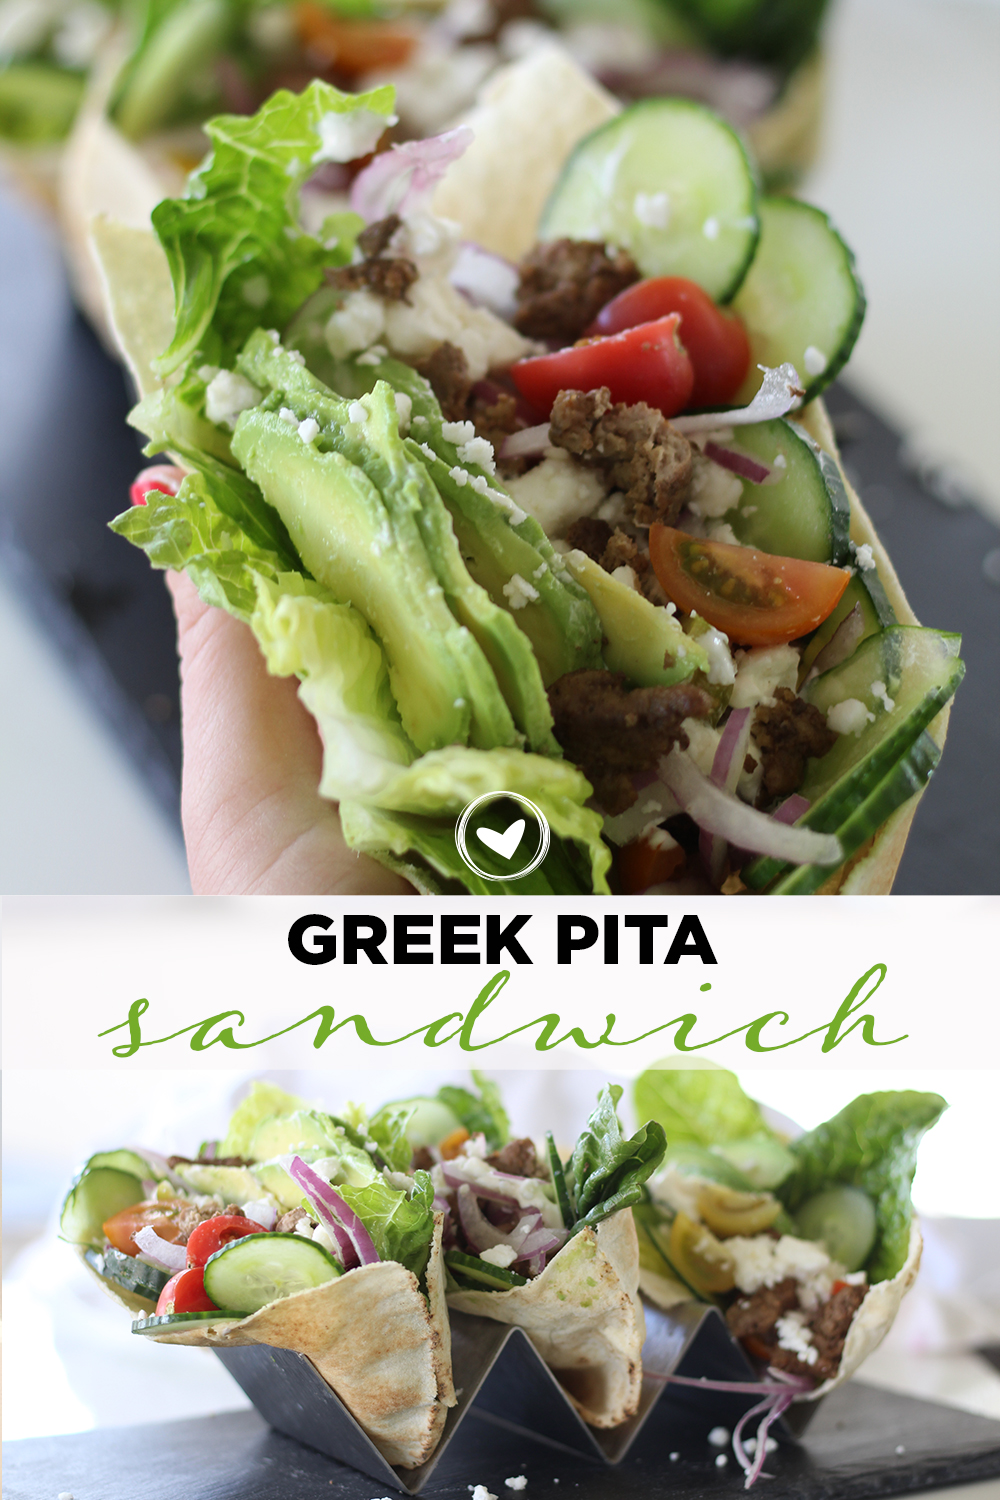 How to make Greek Pita Sandwiches